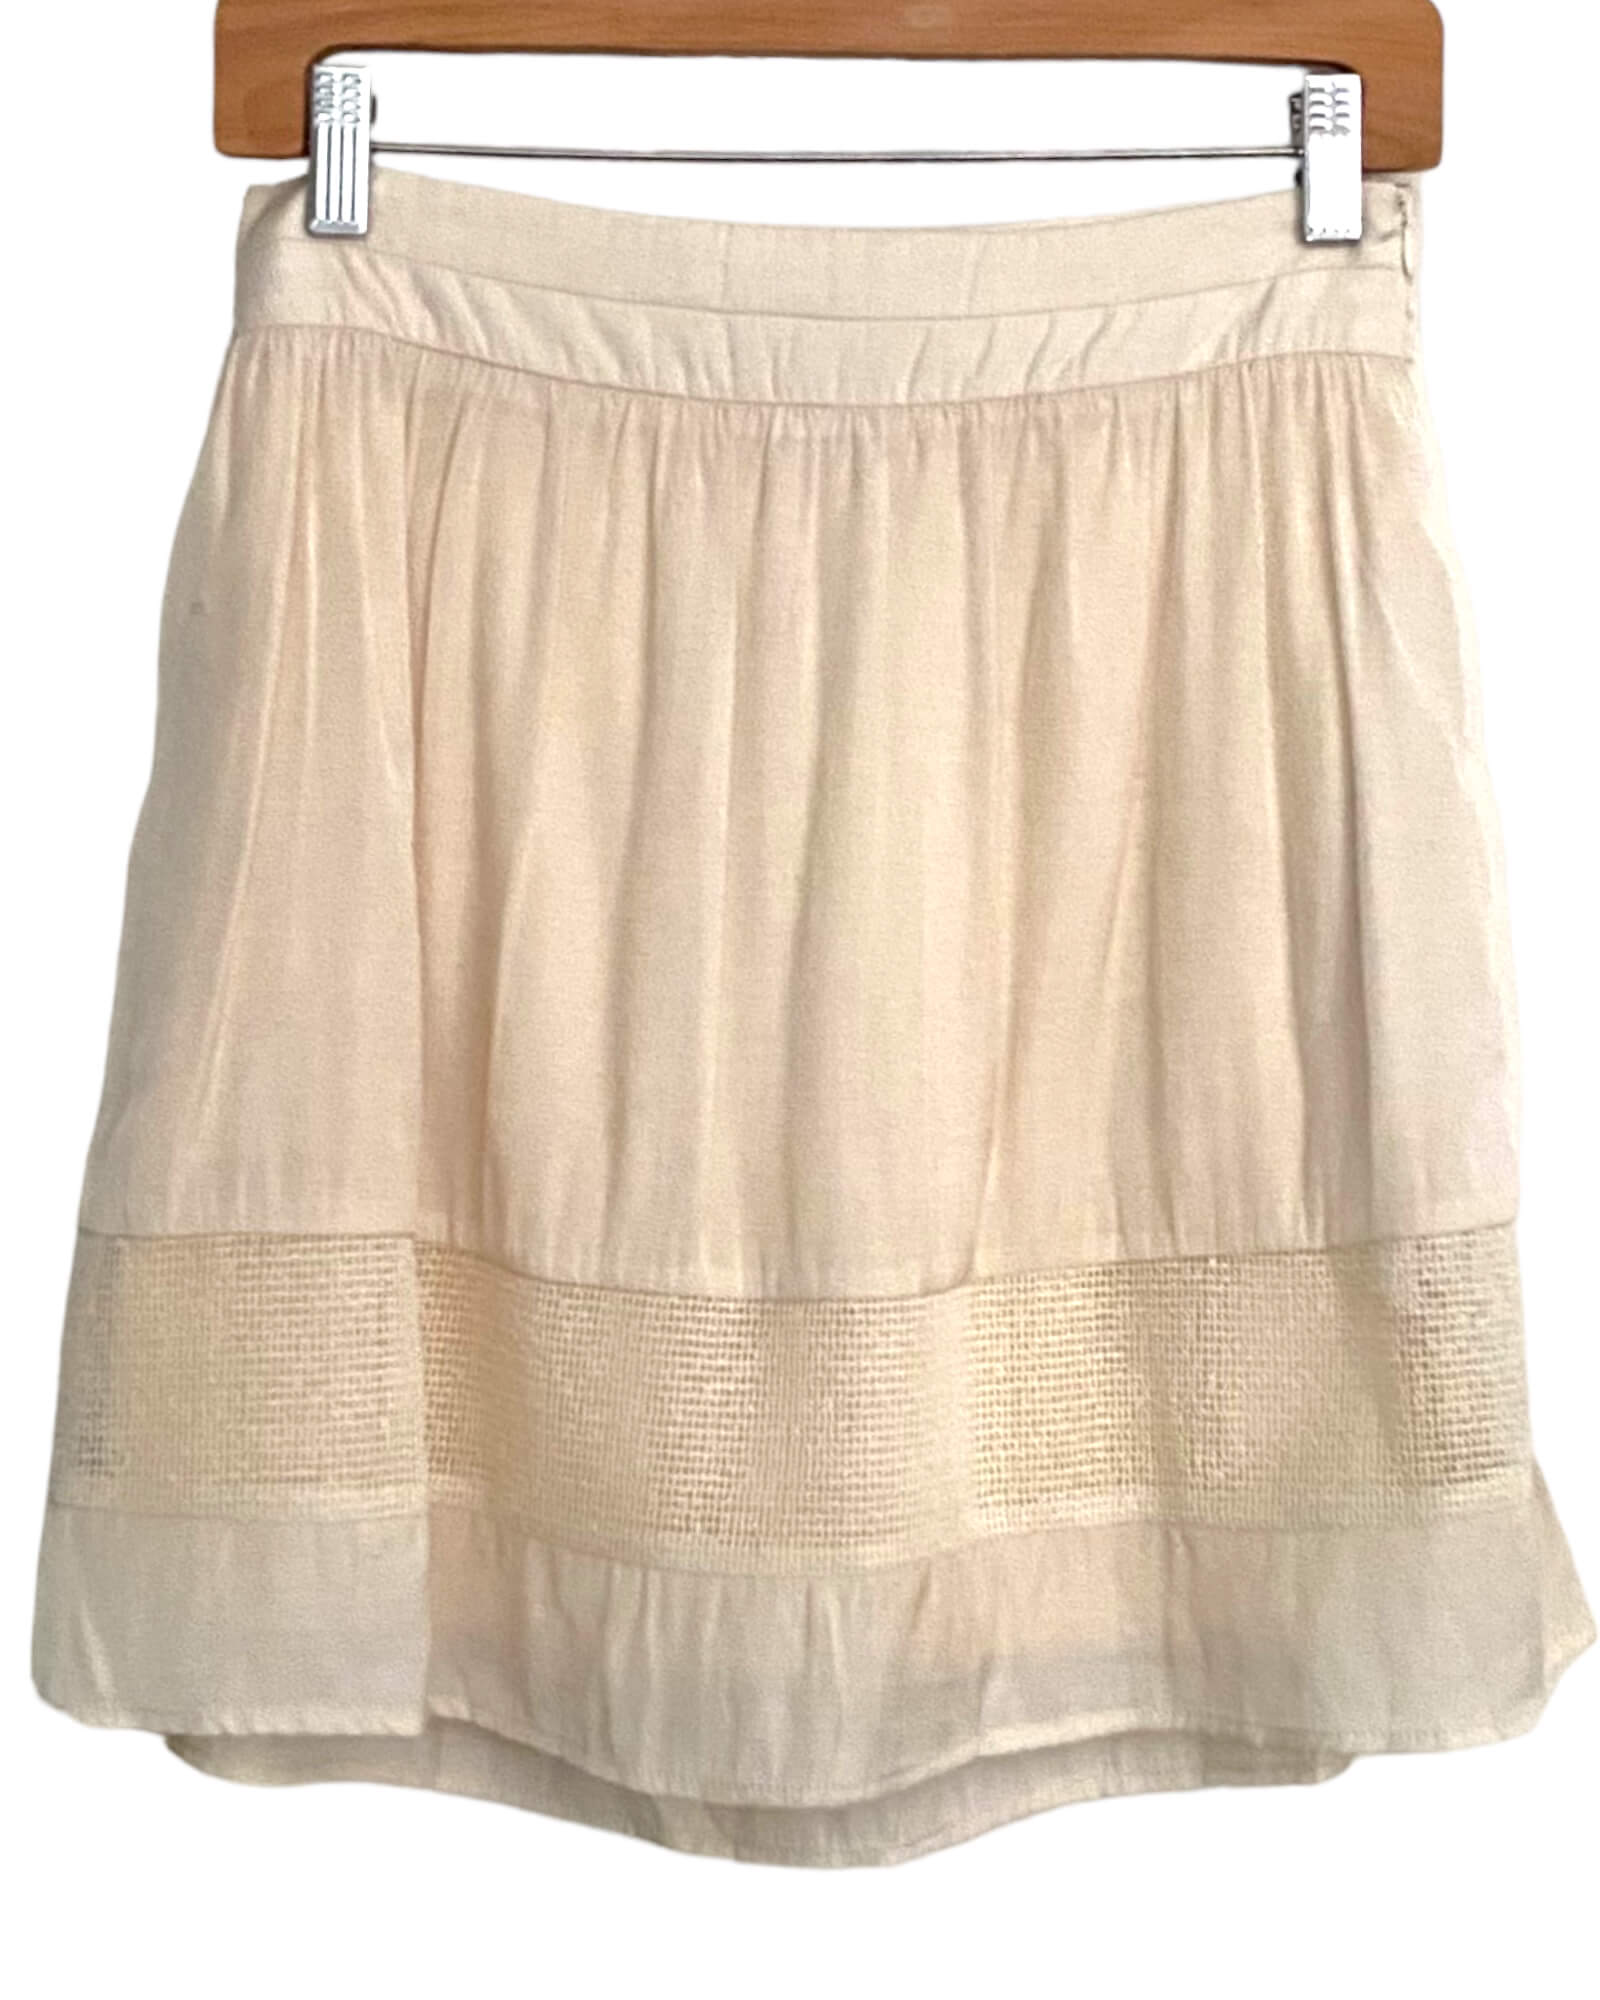 Warm Spring TULLE creme pocket mini skirt